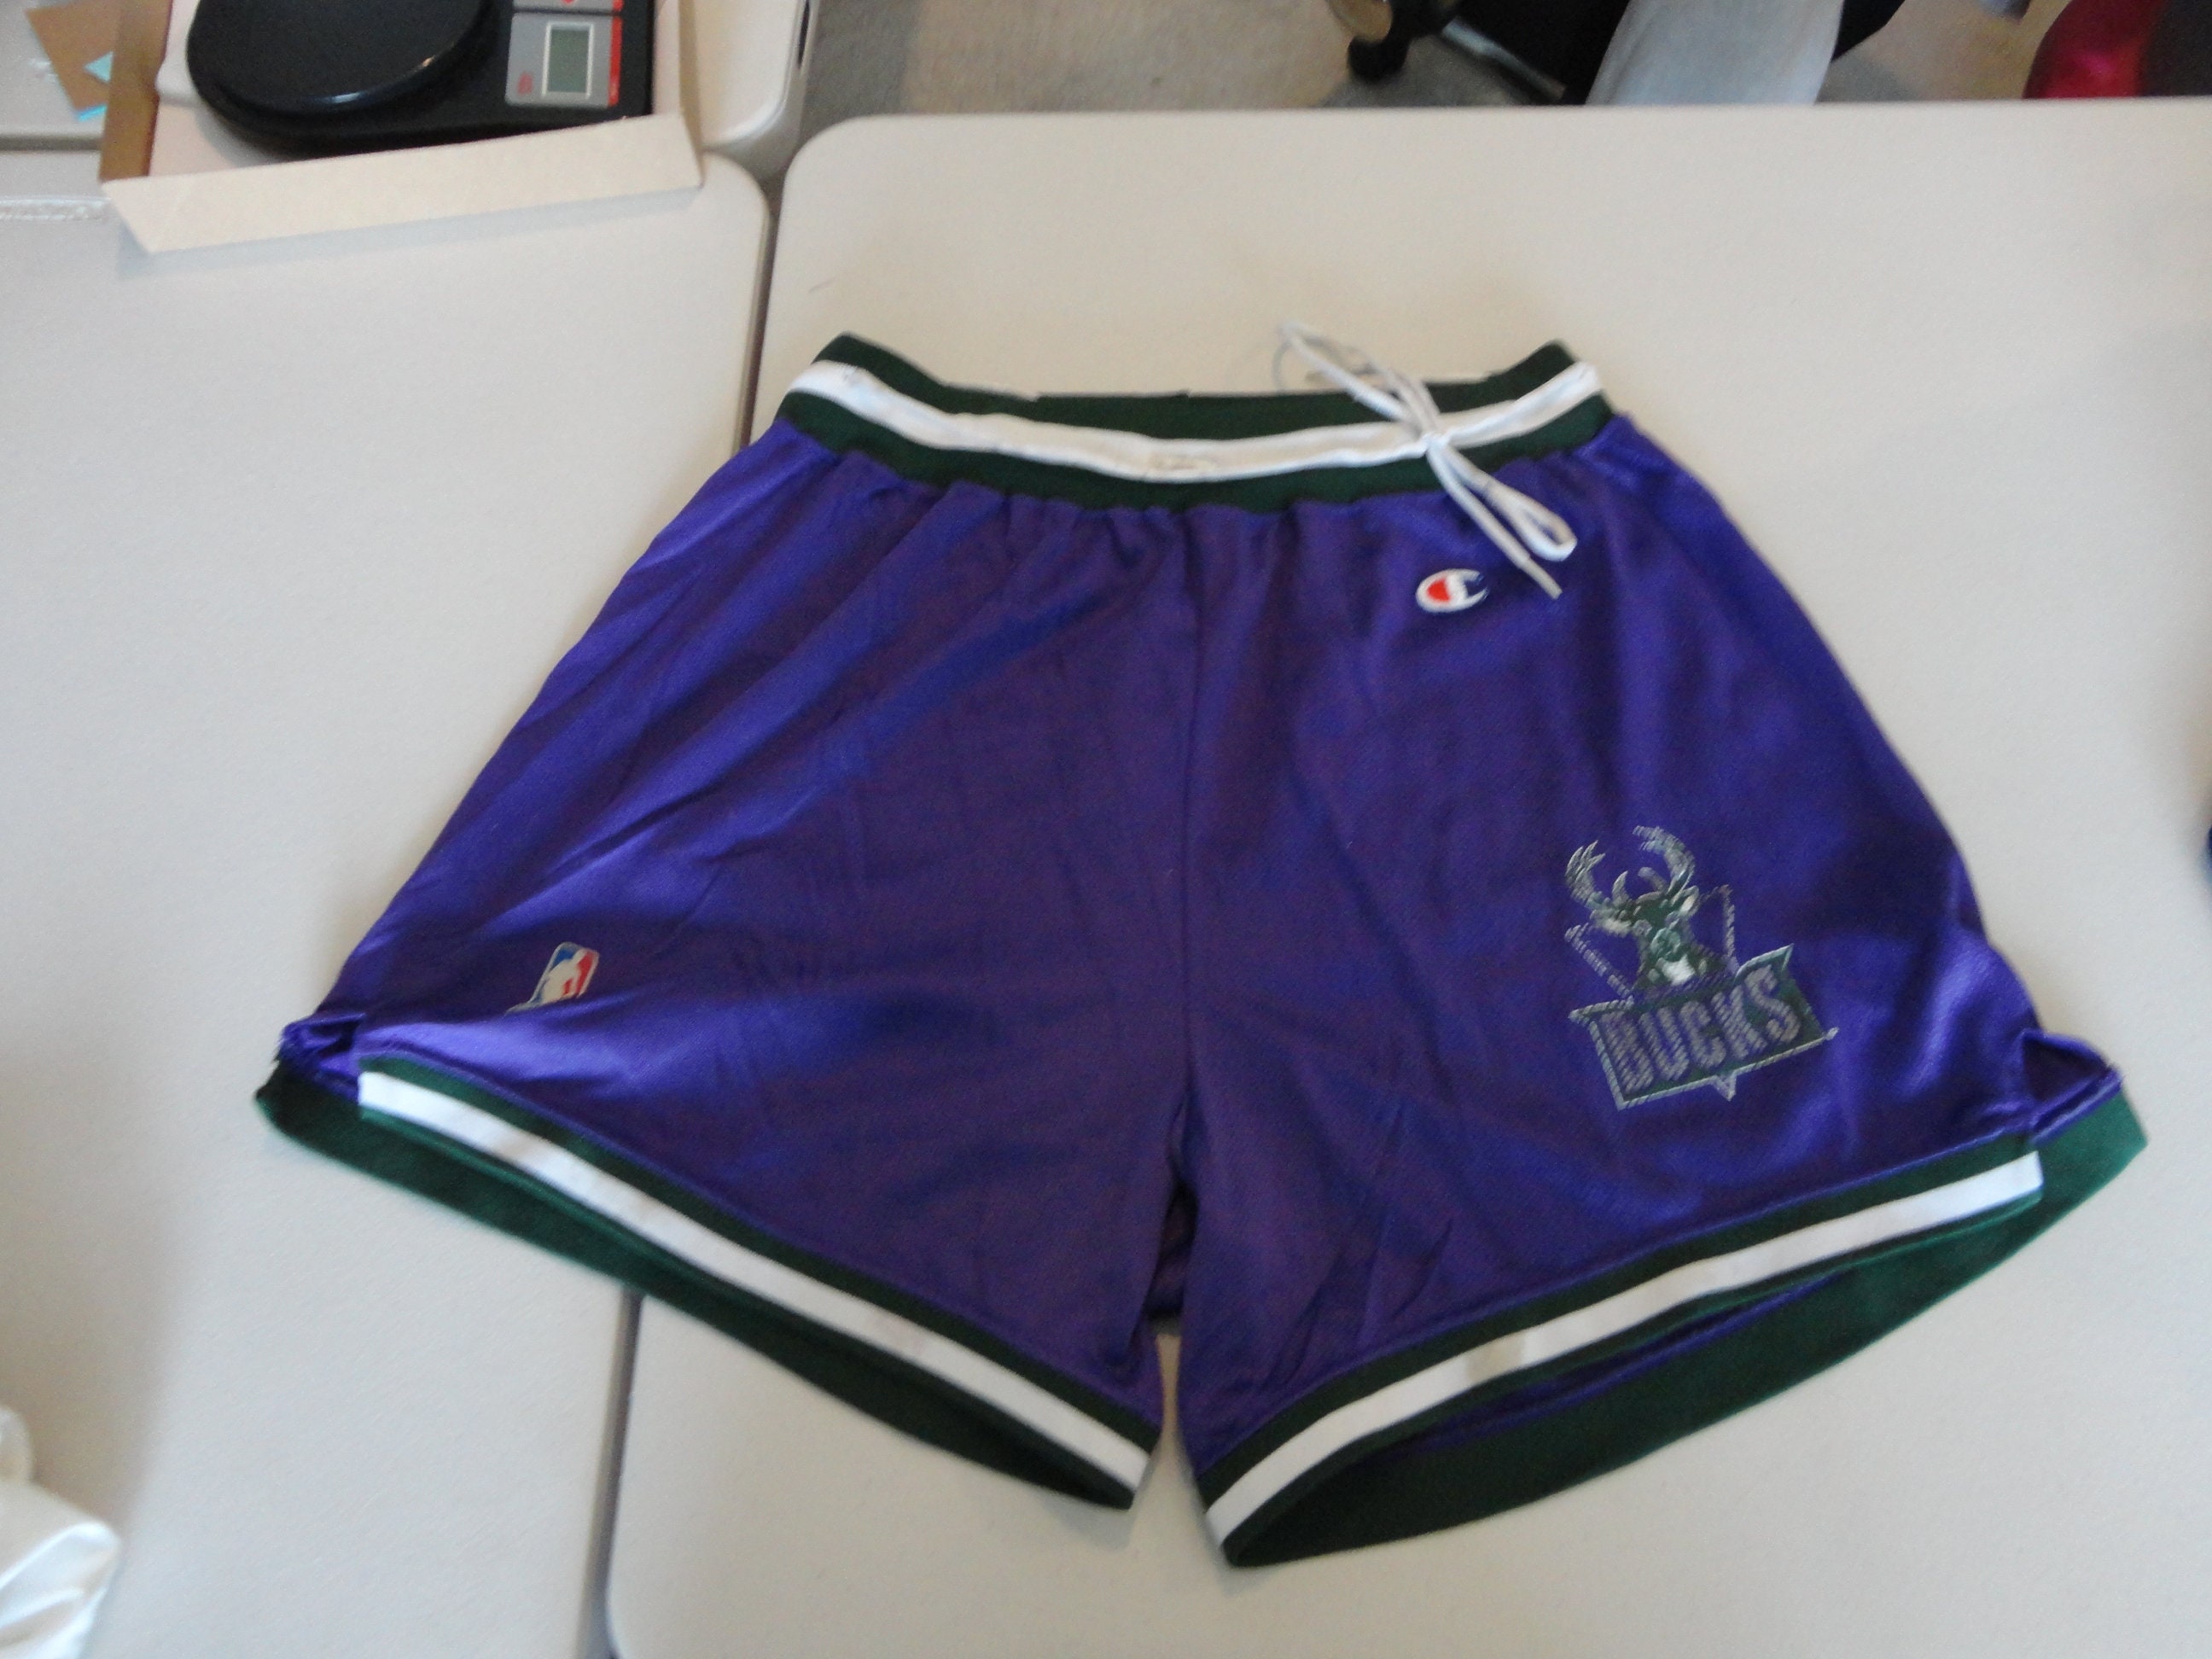 NCL Pajama Shorts - Lavender